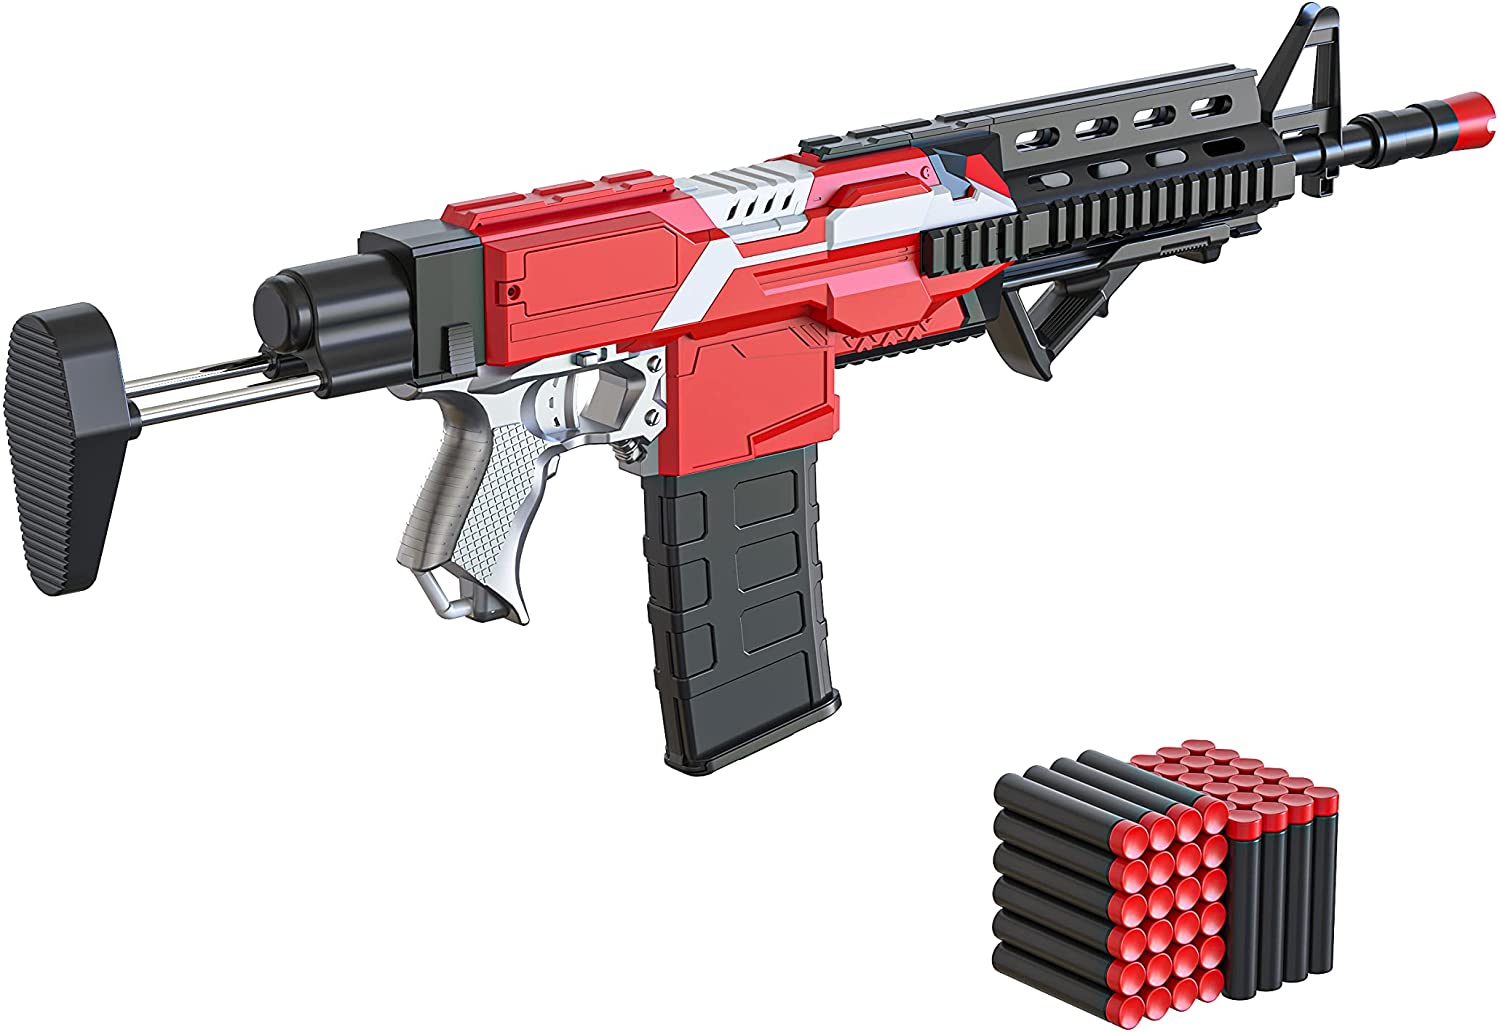 Air soft gun new!! - toys & games - by owner - sale - craigslist